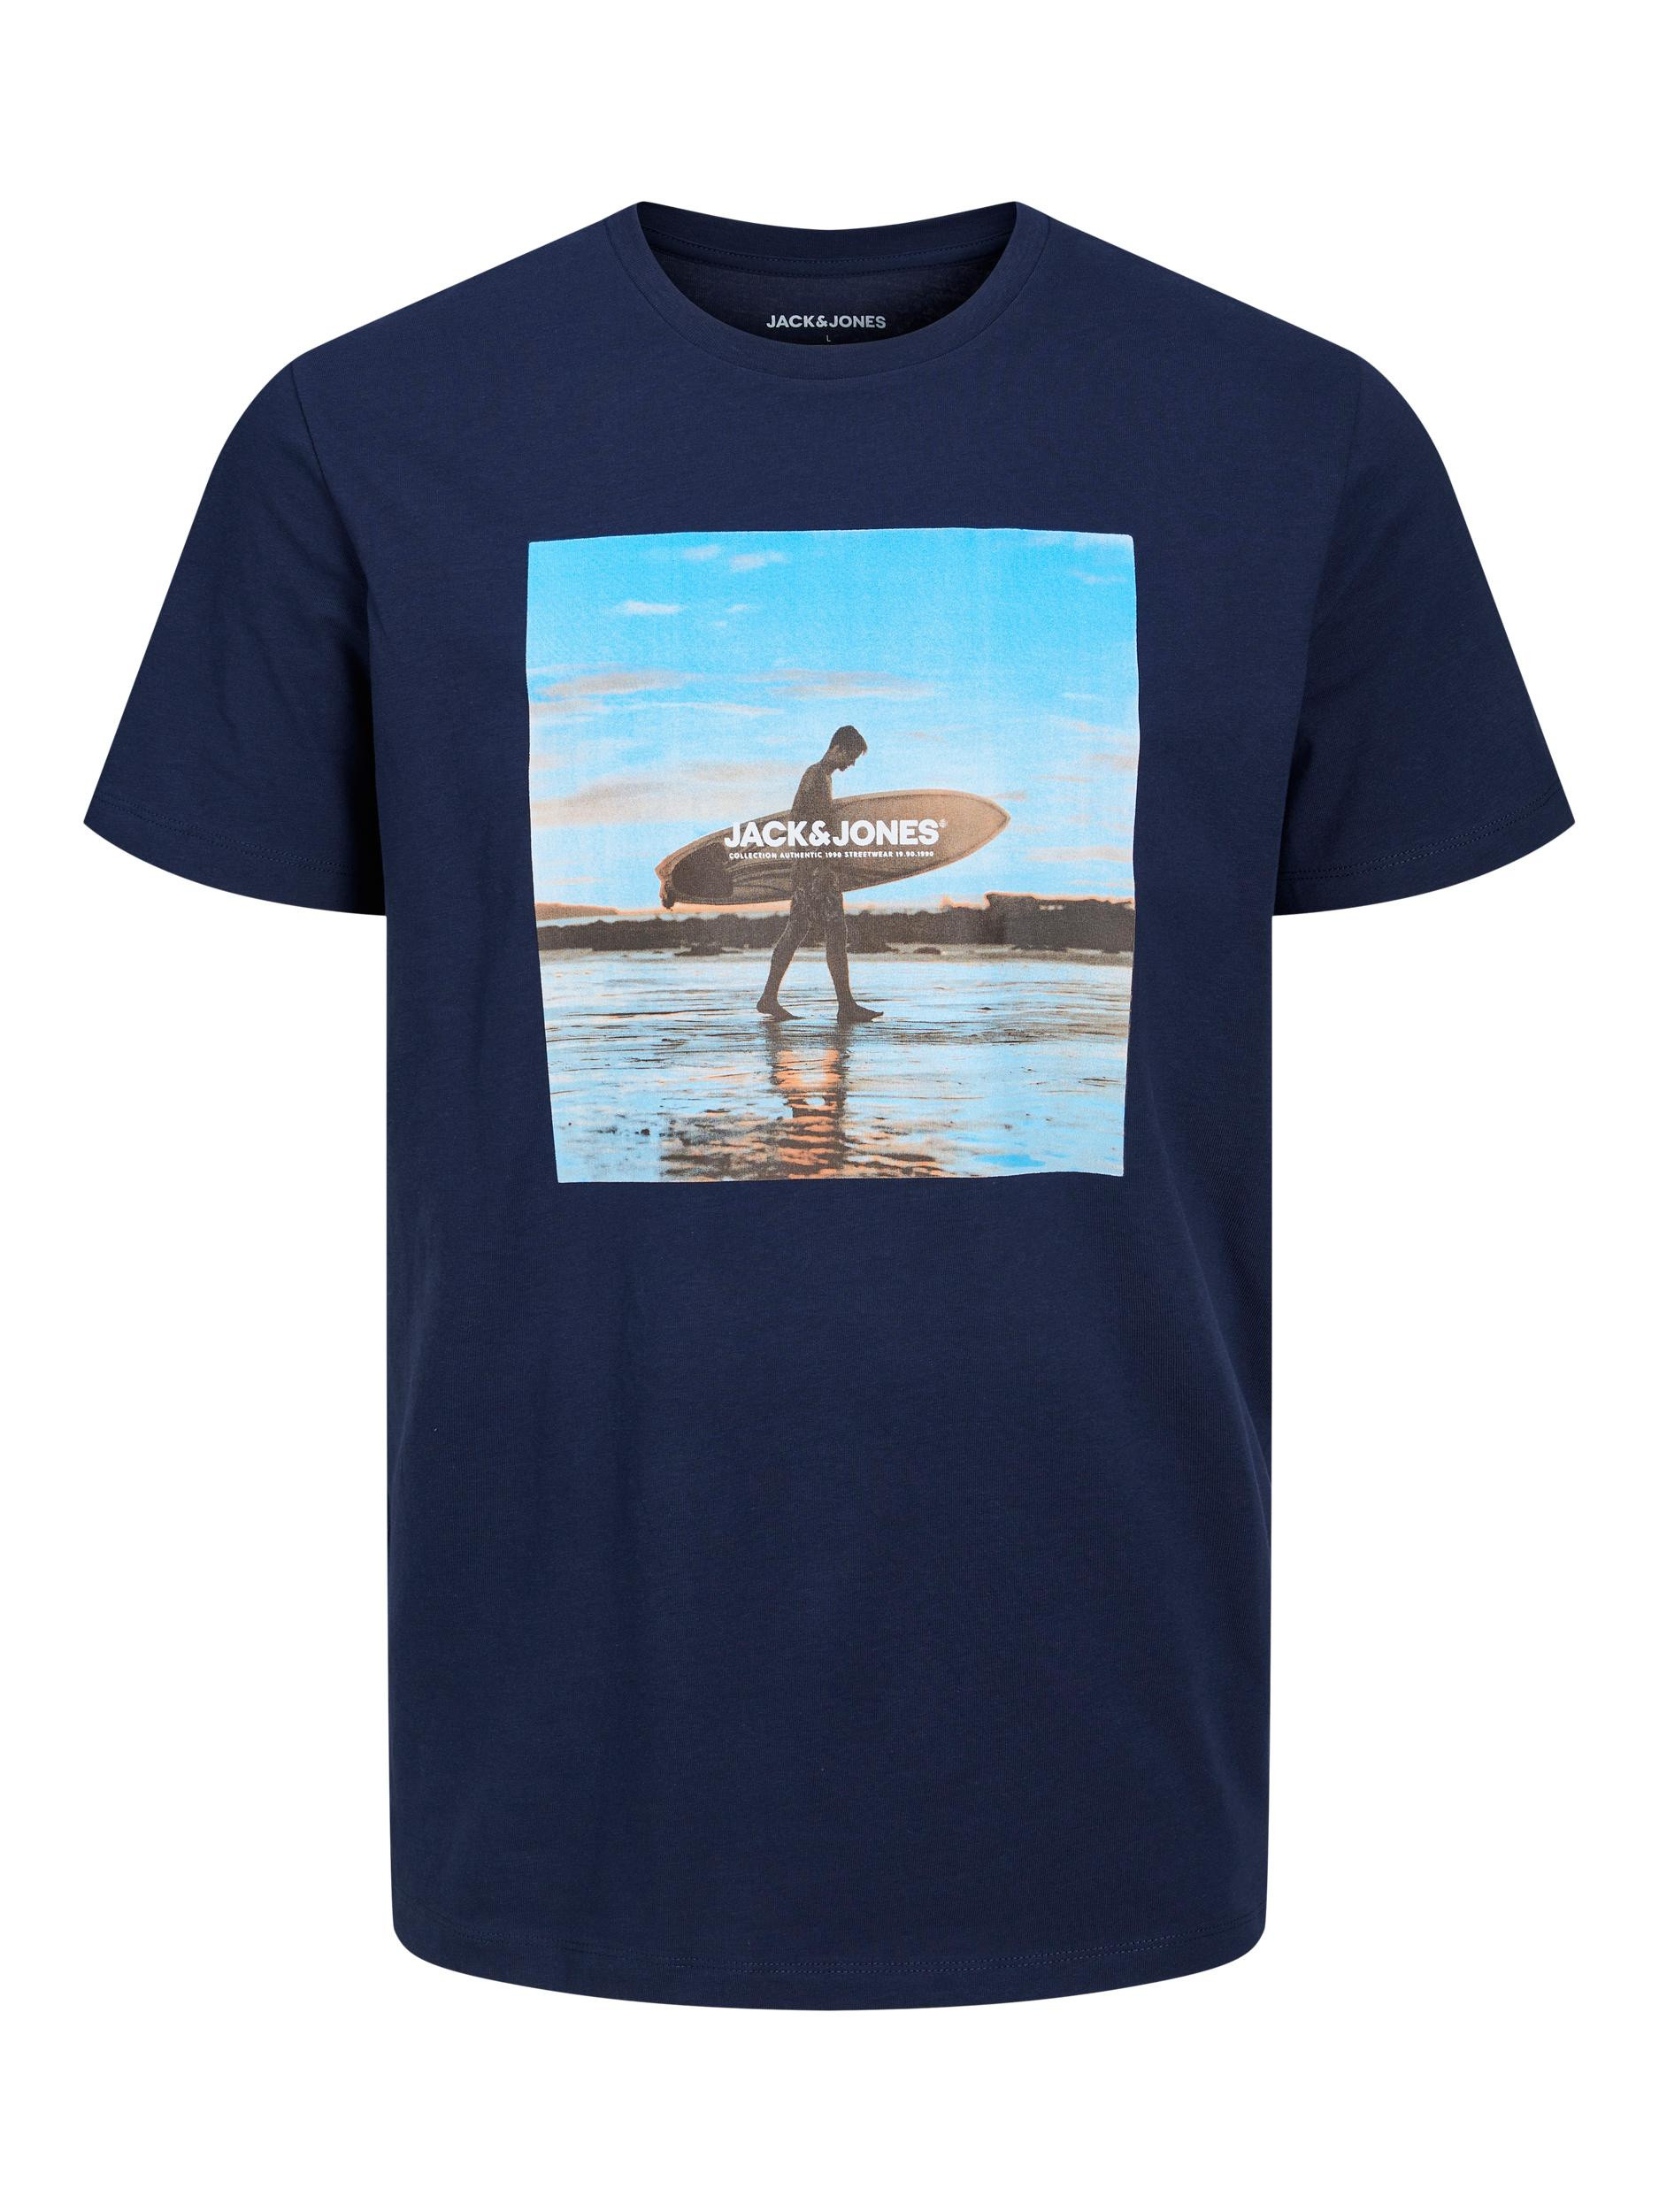 Jack & Jones - Printed cotton T-shirt, Dark Blue, large image number 0